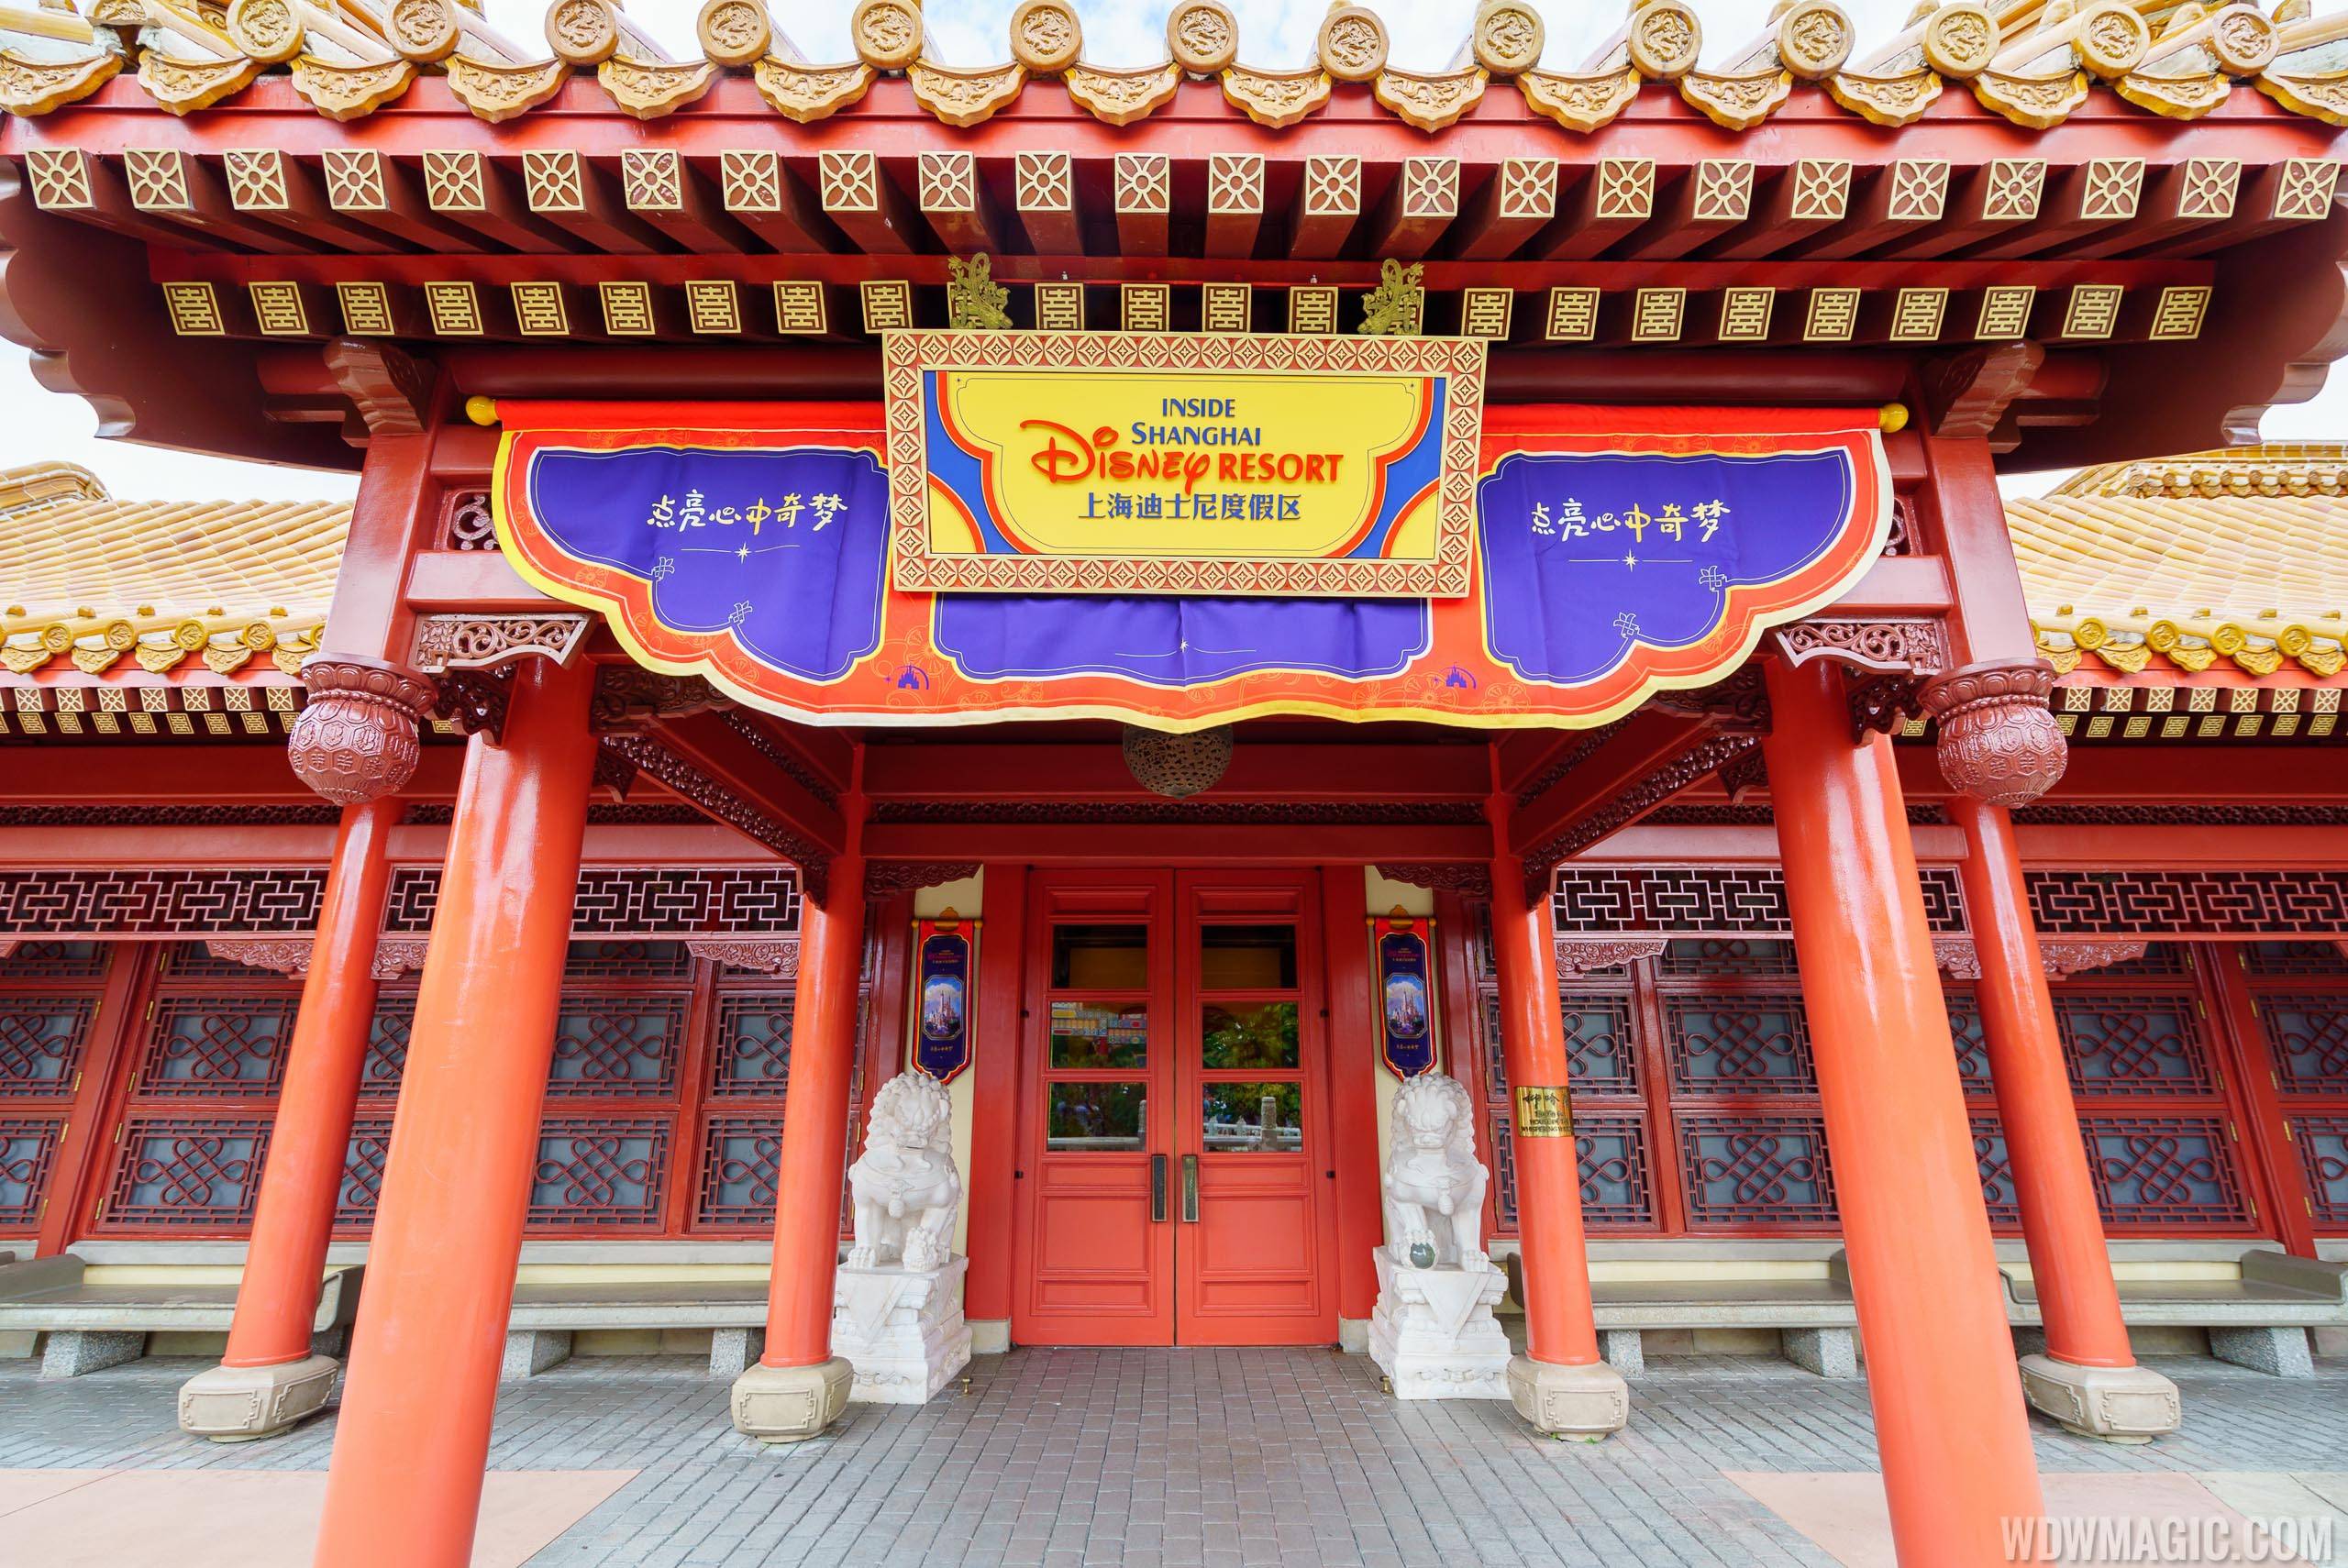 PHOTOS - 'Inside Shanghai Disney Resort' exhibit now open at Epcot's China Pavilion